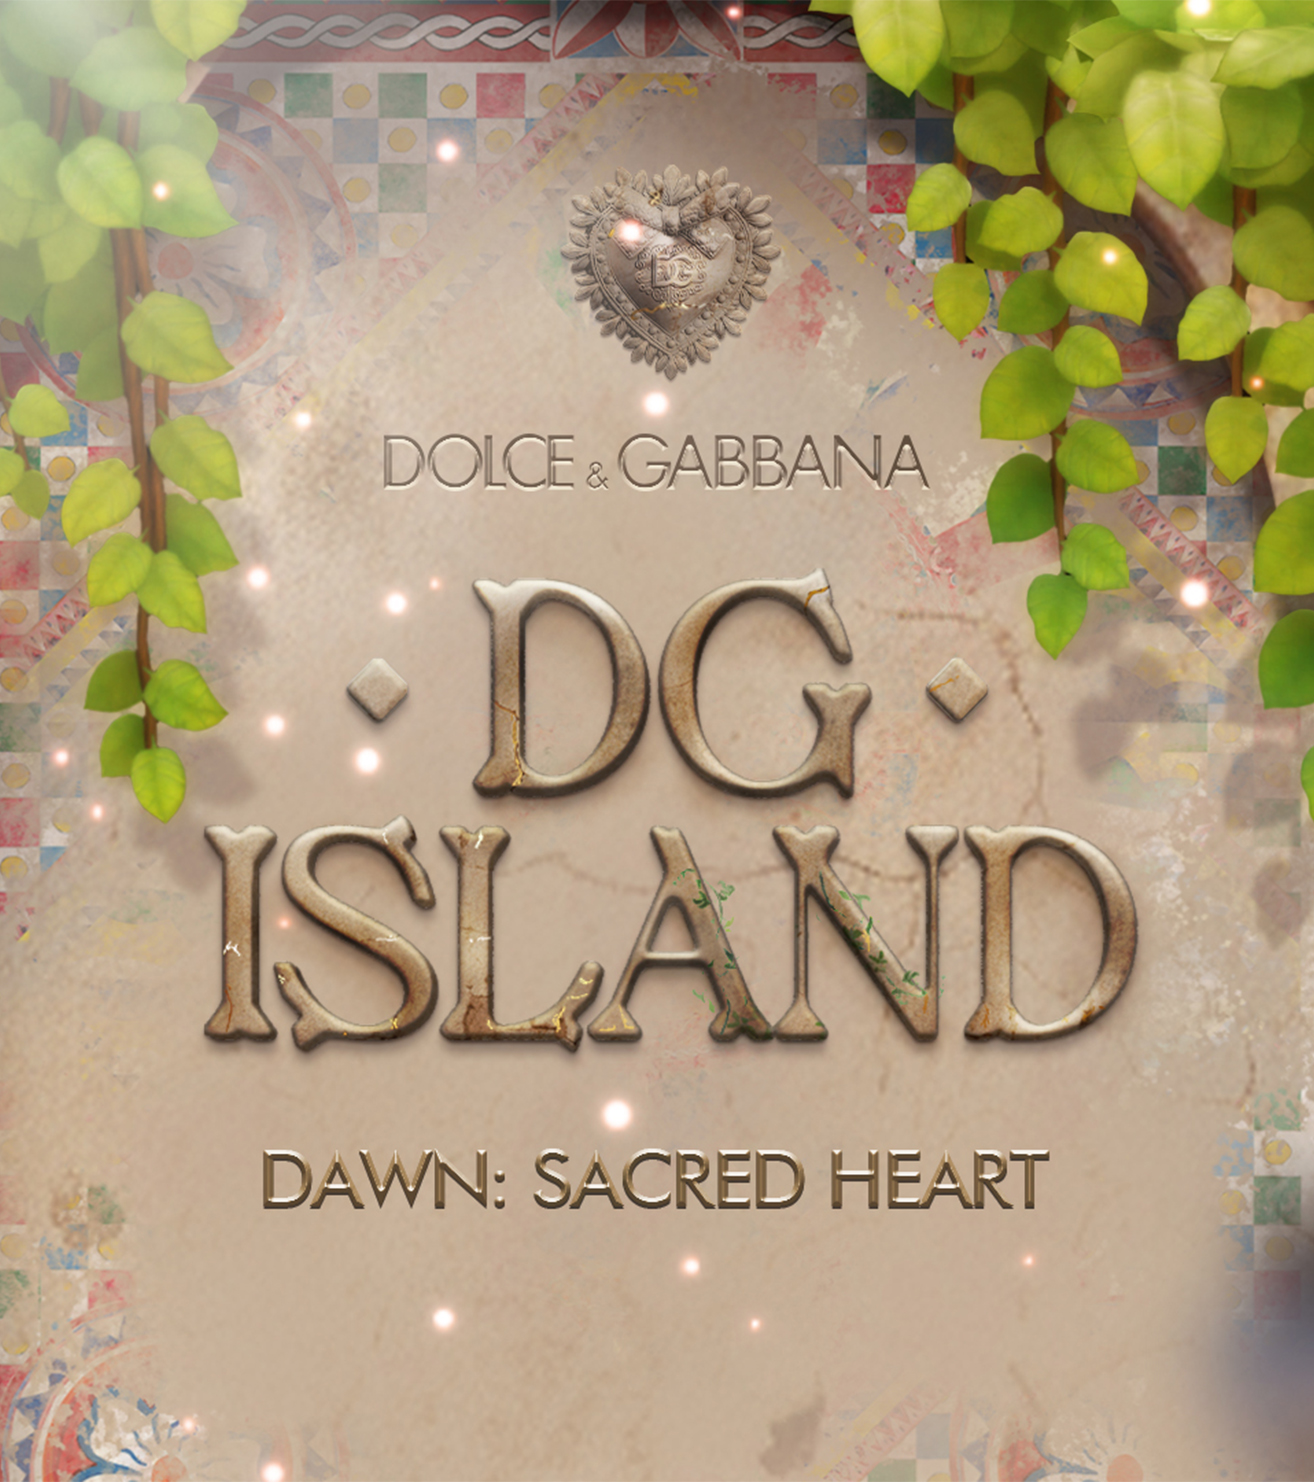 Dolce&Gabbana Unveils DG Island | Dawn: Sacred Heart in Fortnite